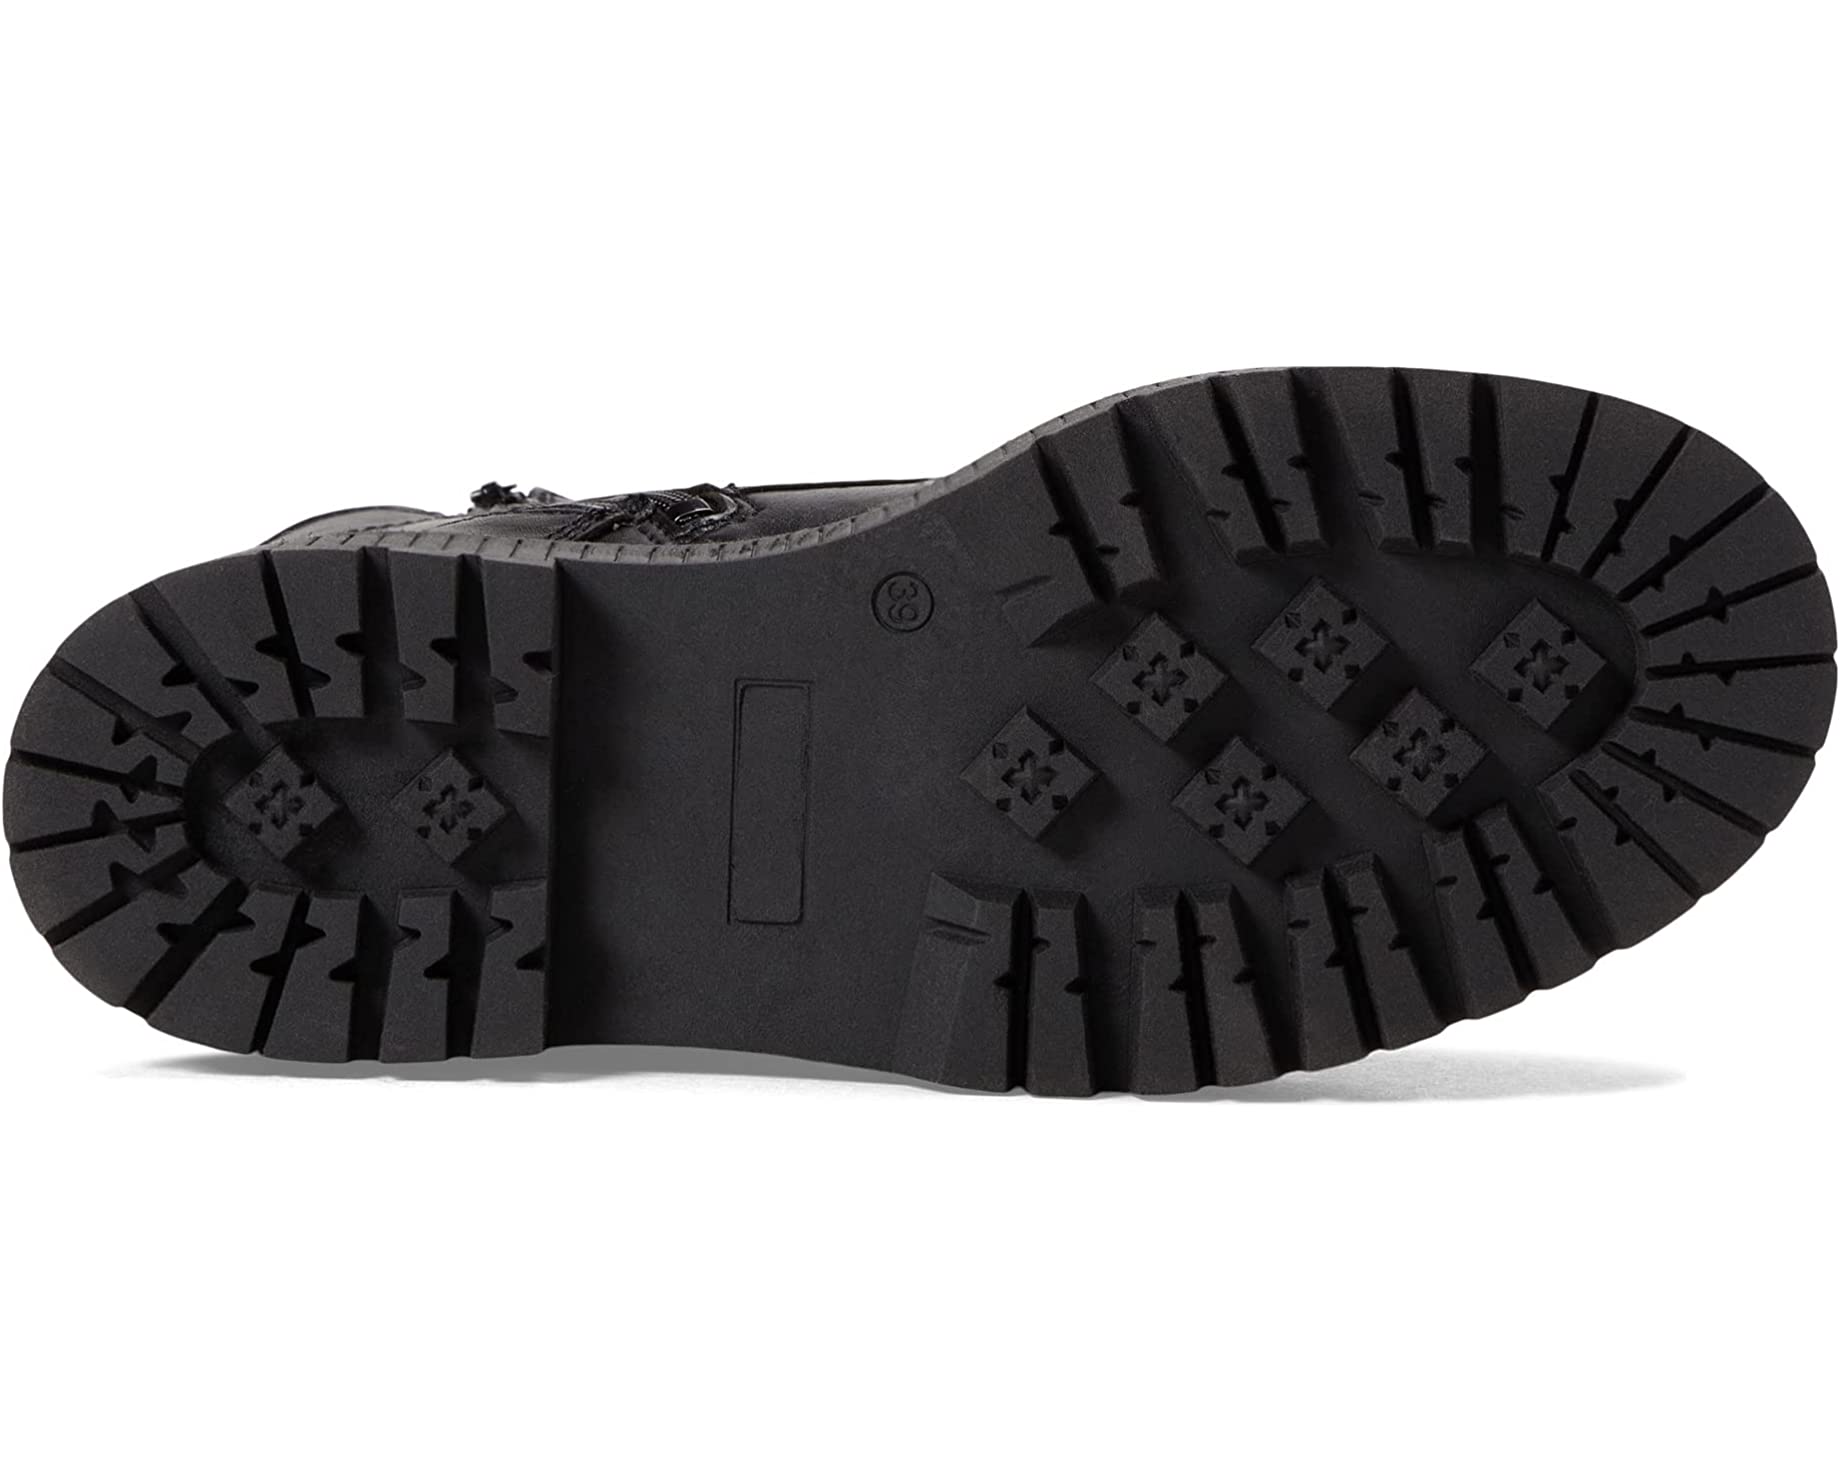 Eric Michael Sage Black Leather Boot with Platform Bottom | Ooh! Ooh ...